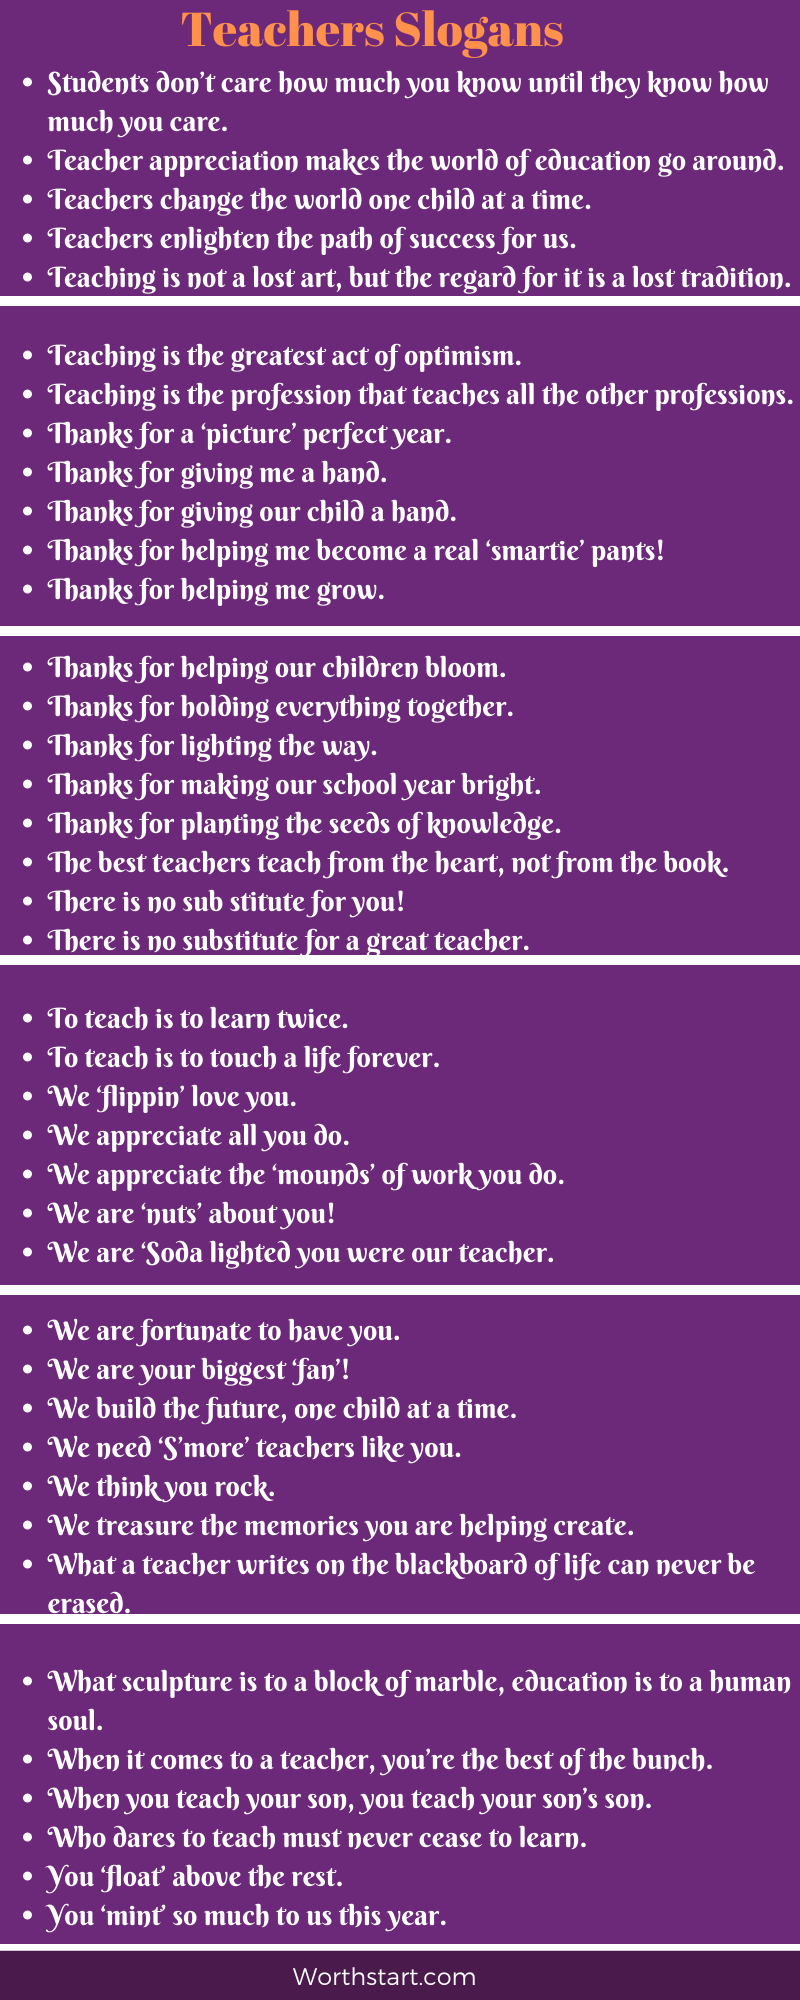 Teachers Slogans